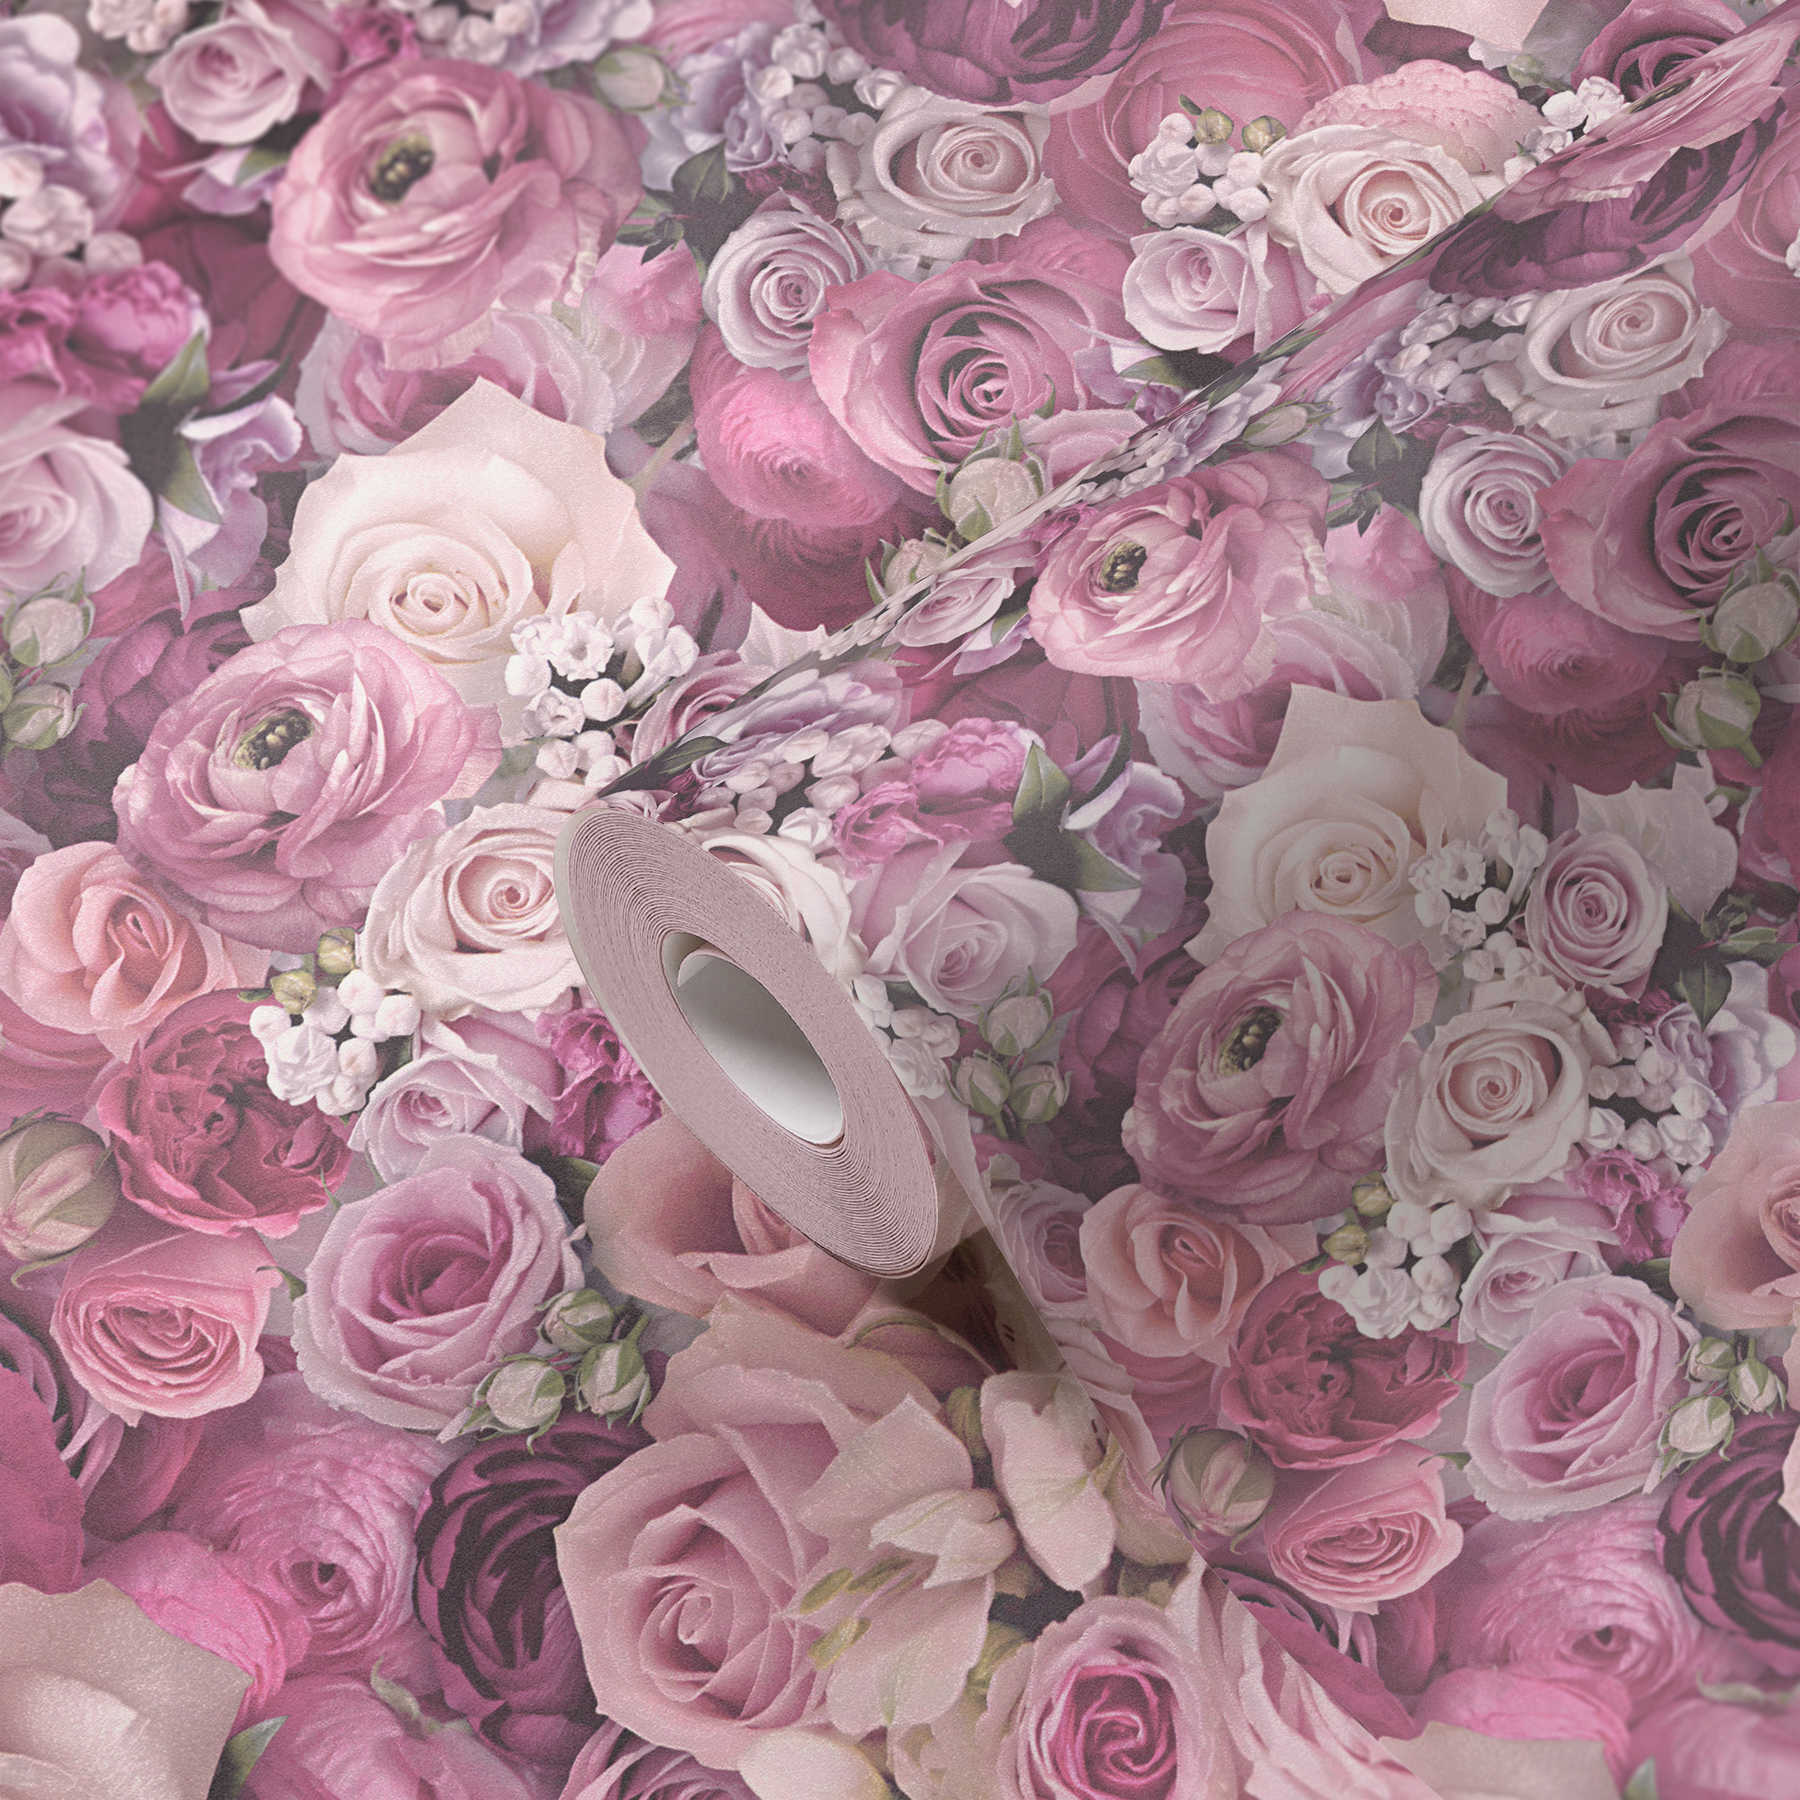             Carta da parati 3D in tessuto non tessuto motivo rose fiori - viola
        